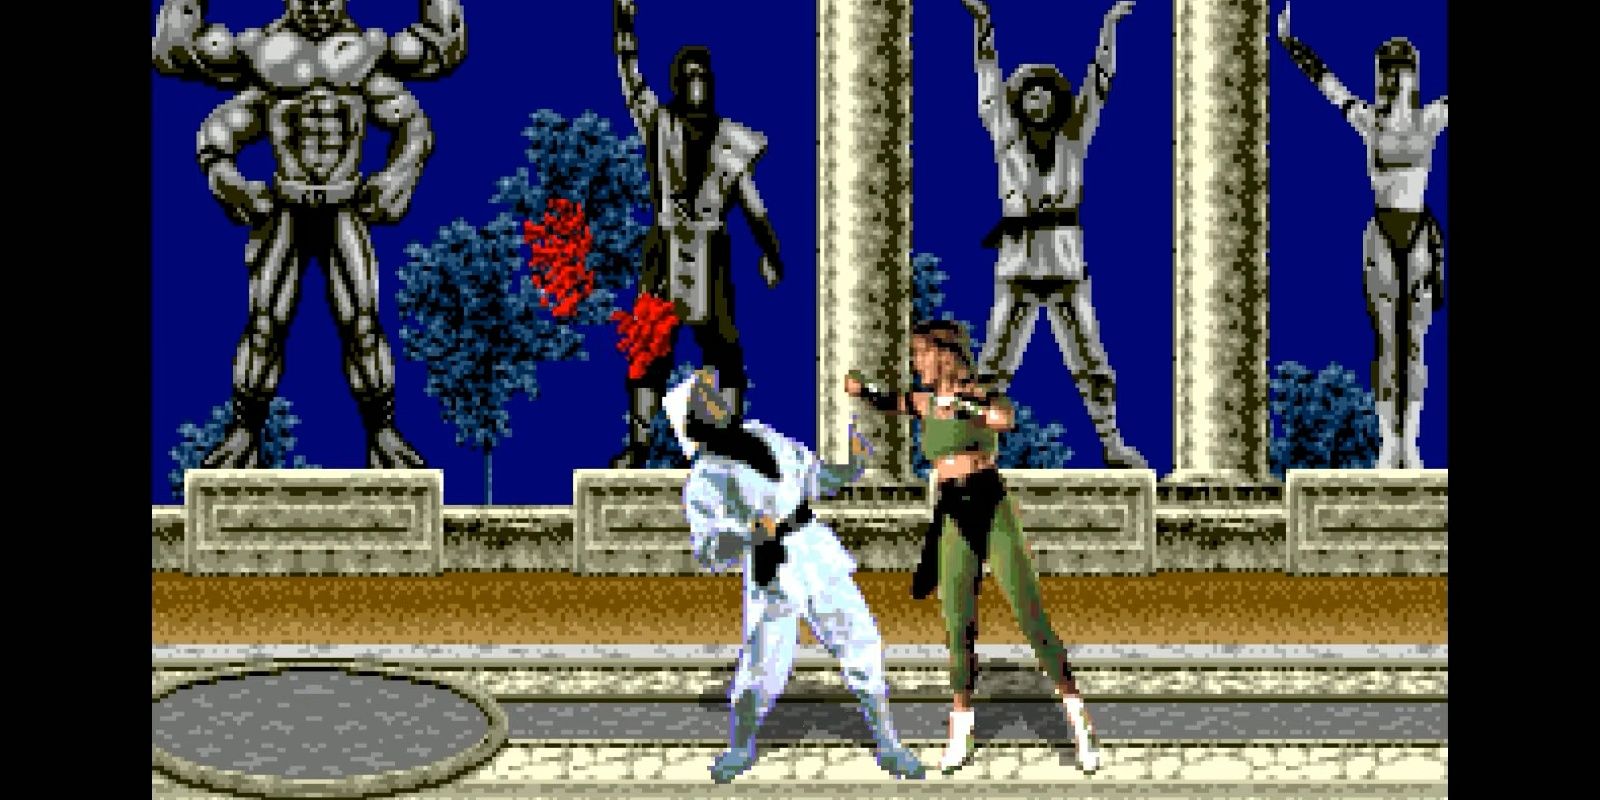 Sonya punching Raiden causing blood to fly out in the Genesis version of Mortal Kombat 1.